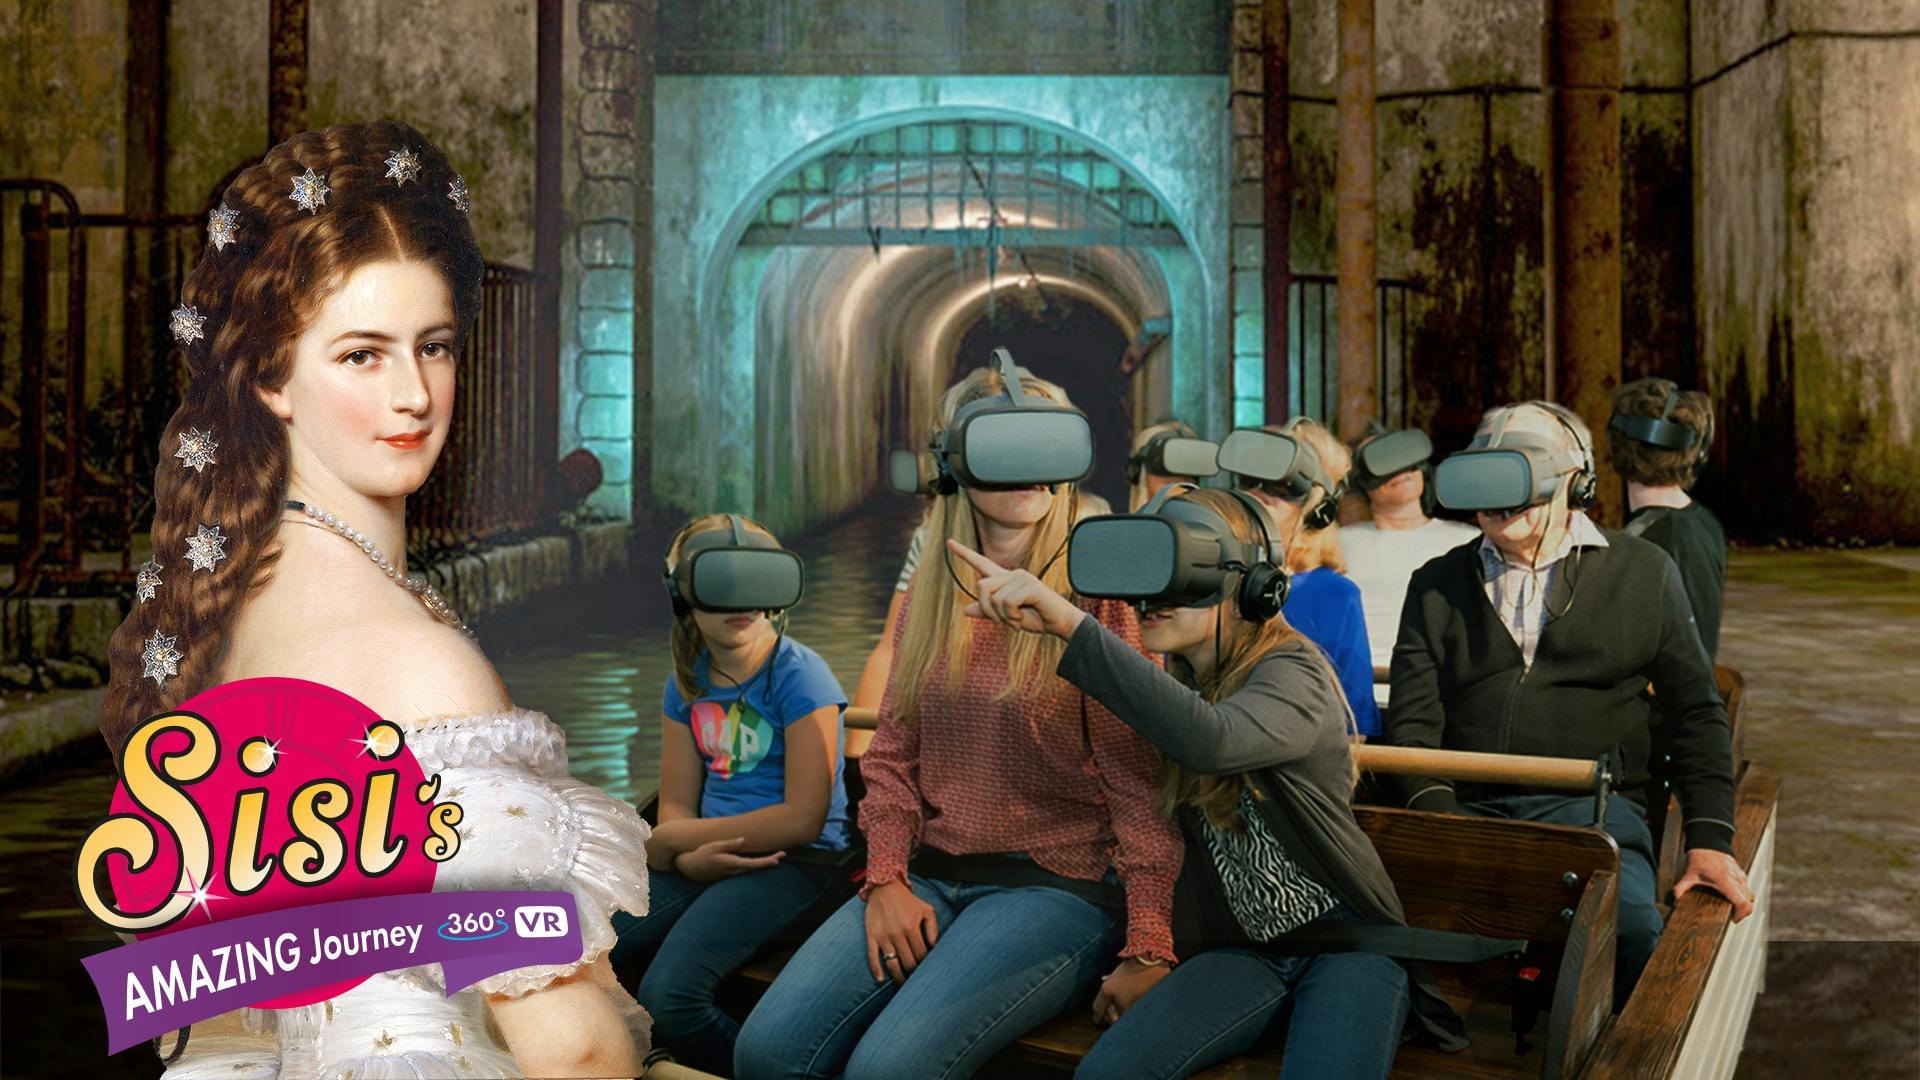 Sisi's amazing journey virtual reality boat ride Musement